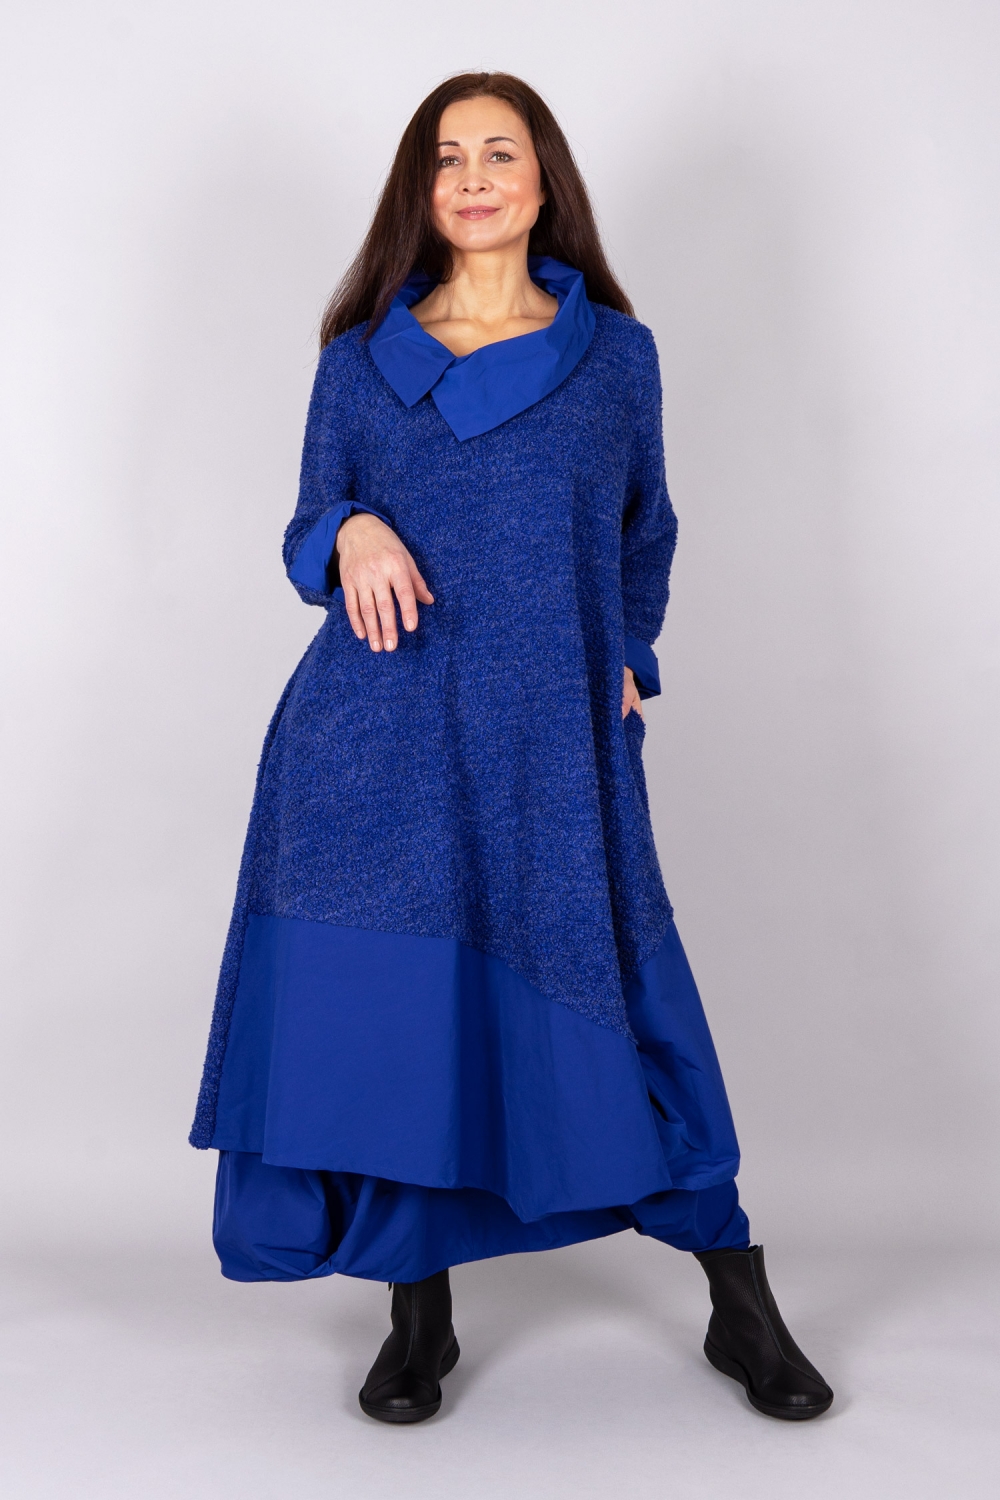 Ellipse Kleid in A-Form aus Bouclé kombiniert mit Taft in royalblau